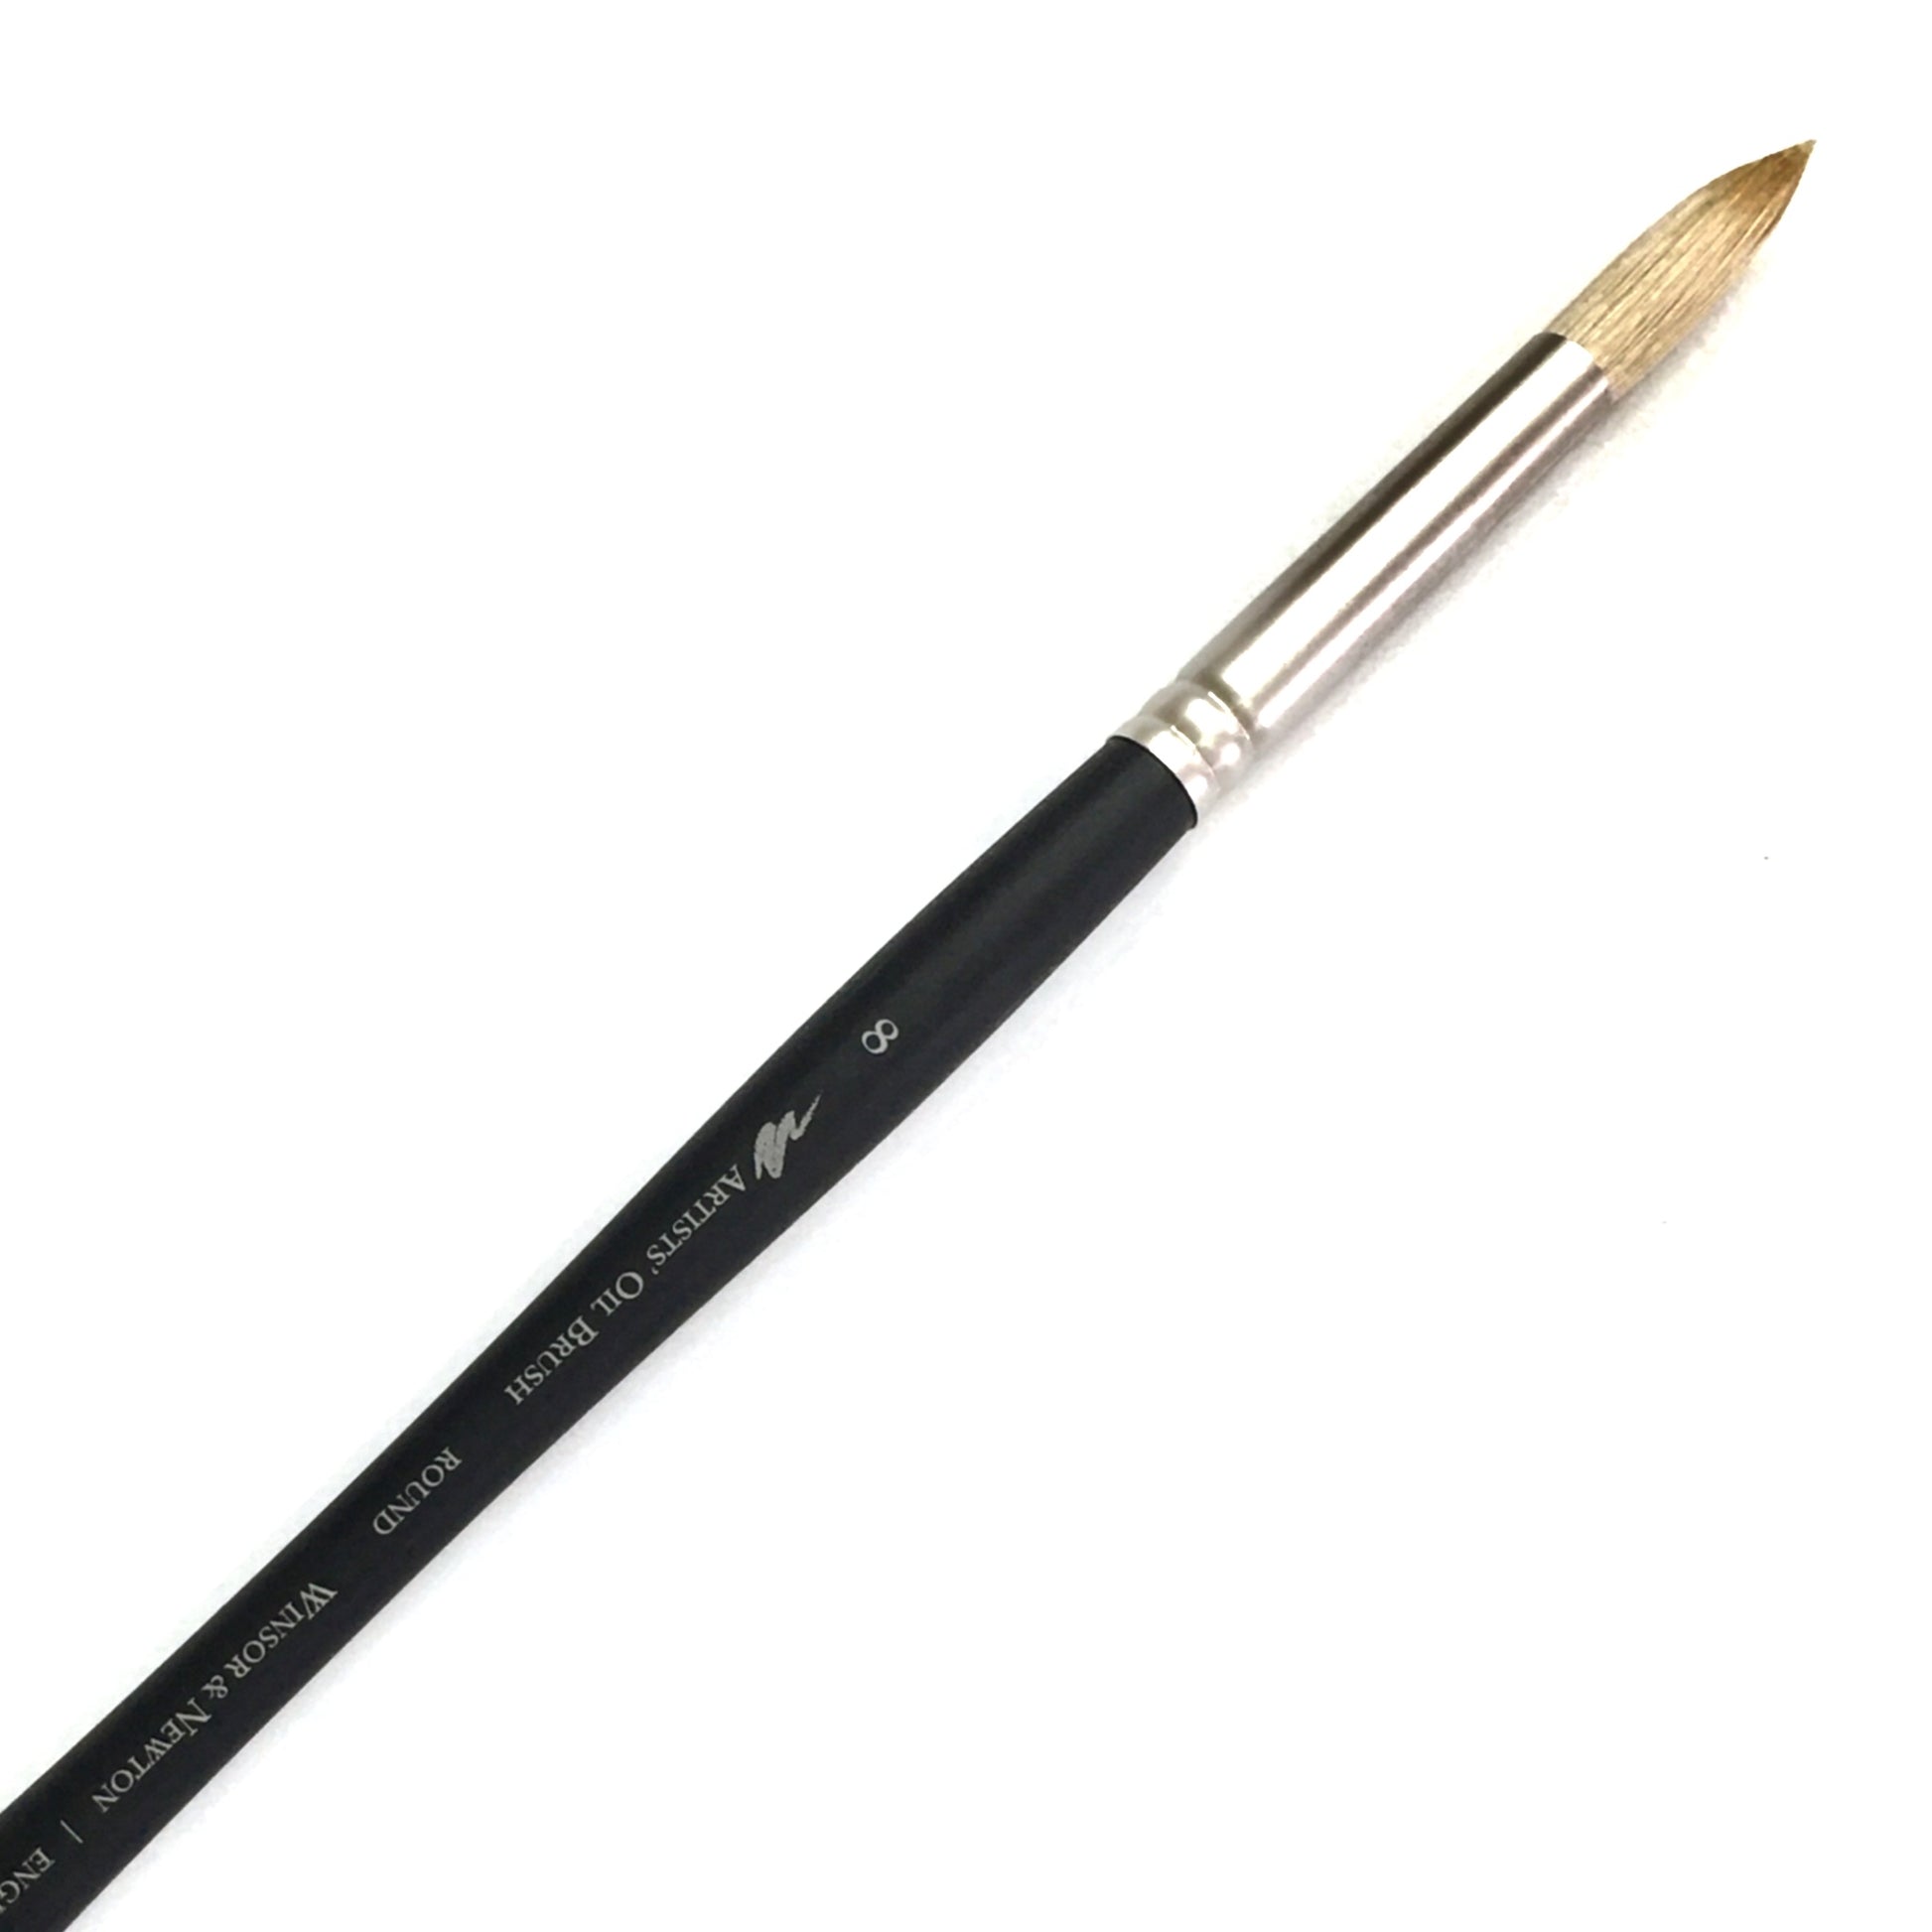 Winsor & Newton Professional Brush Round Size 0